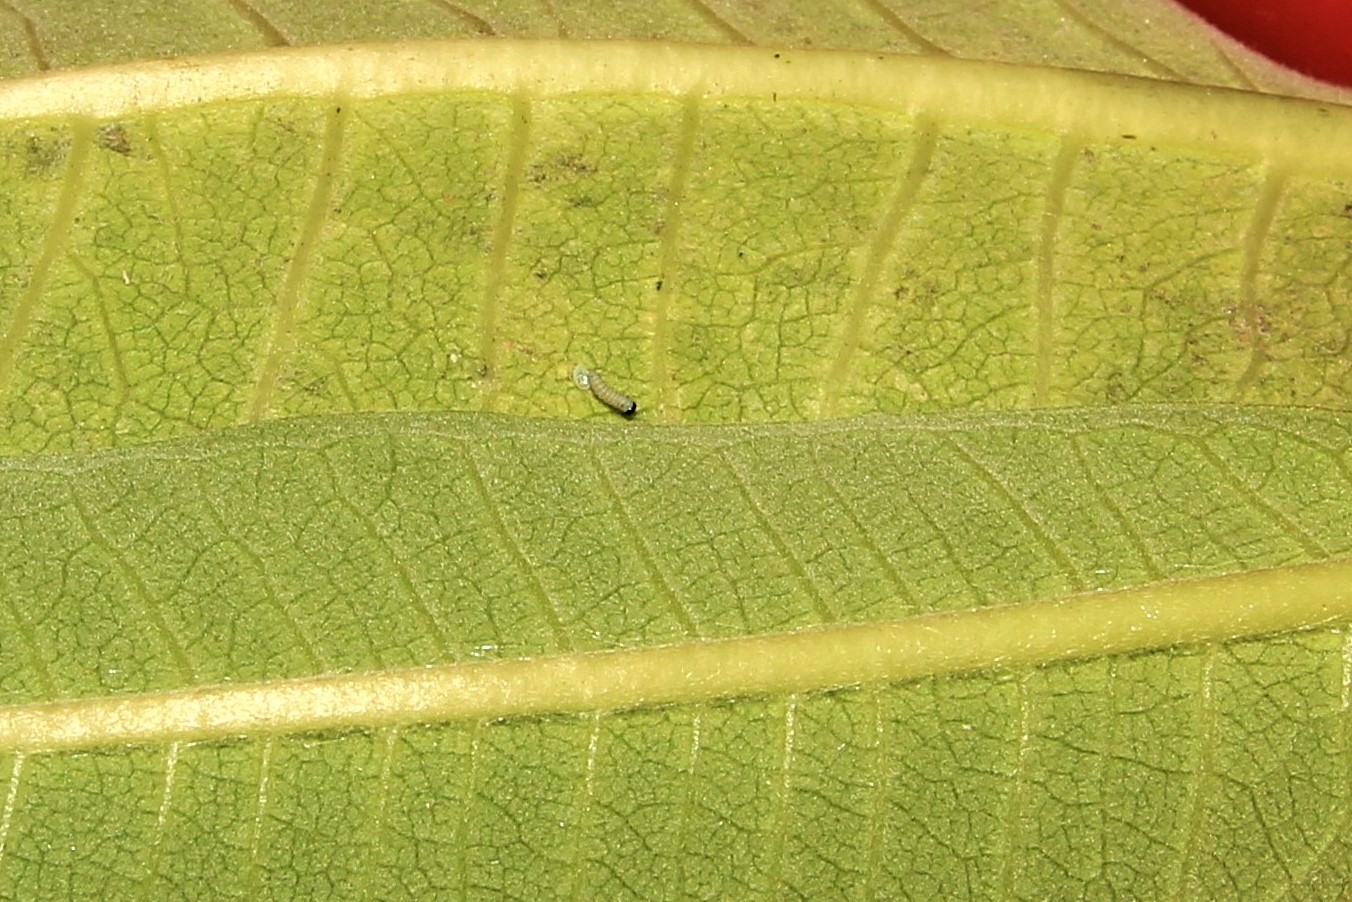 Miniscule Monarch Egg Hatches into Caterpillar